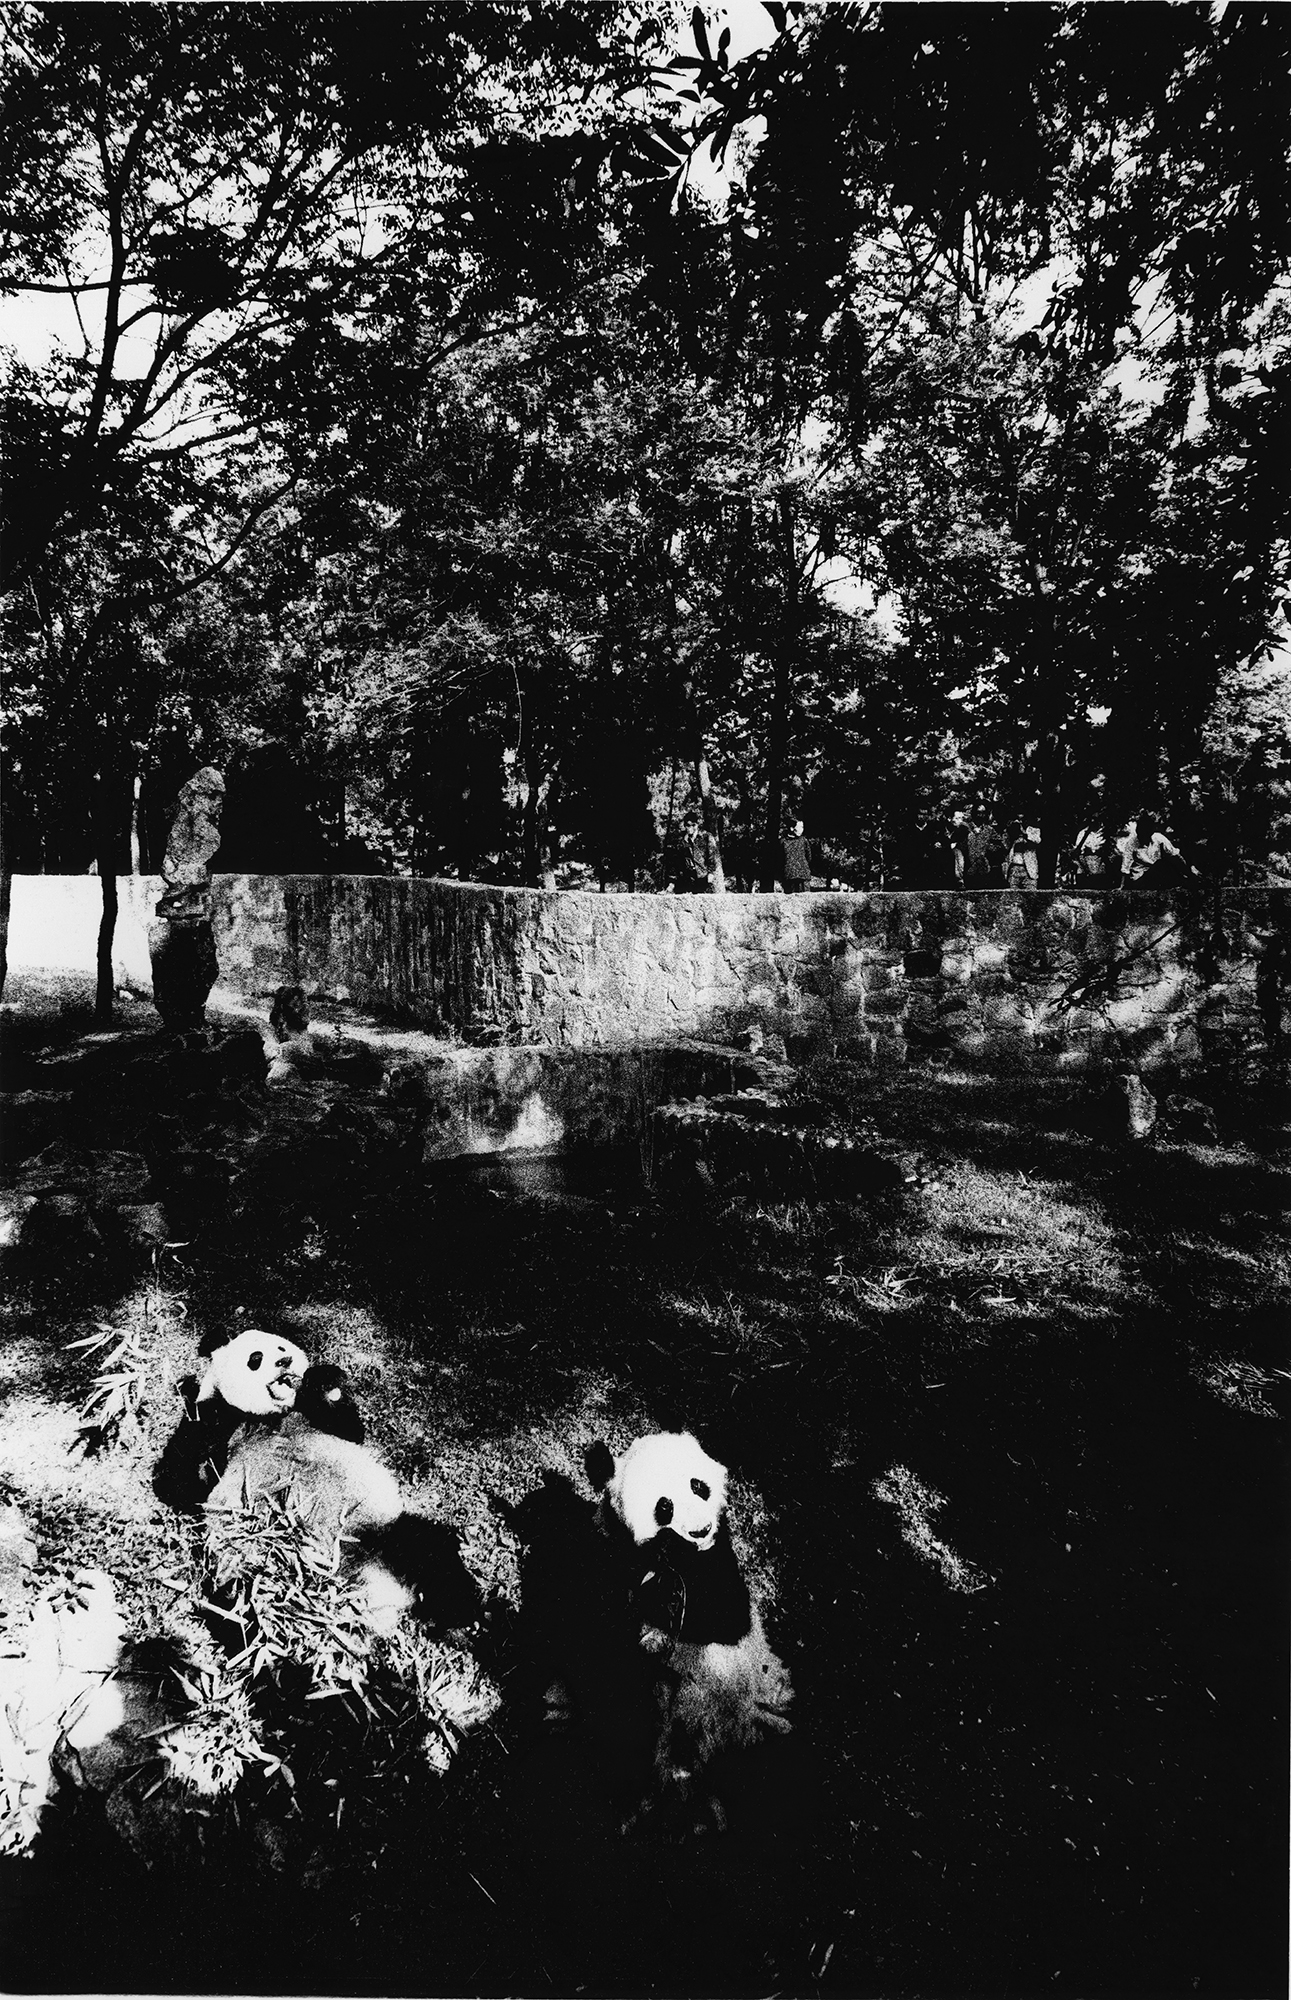 kazuo kitai china 1970s photography of china 68広州1973 - Kazuo Kitai |  - Kazuo Kitai